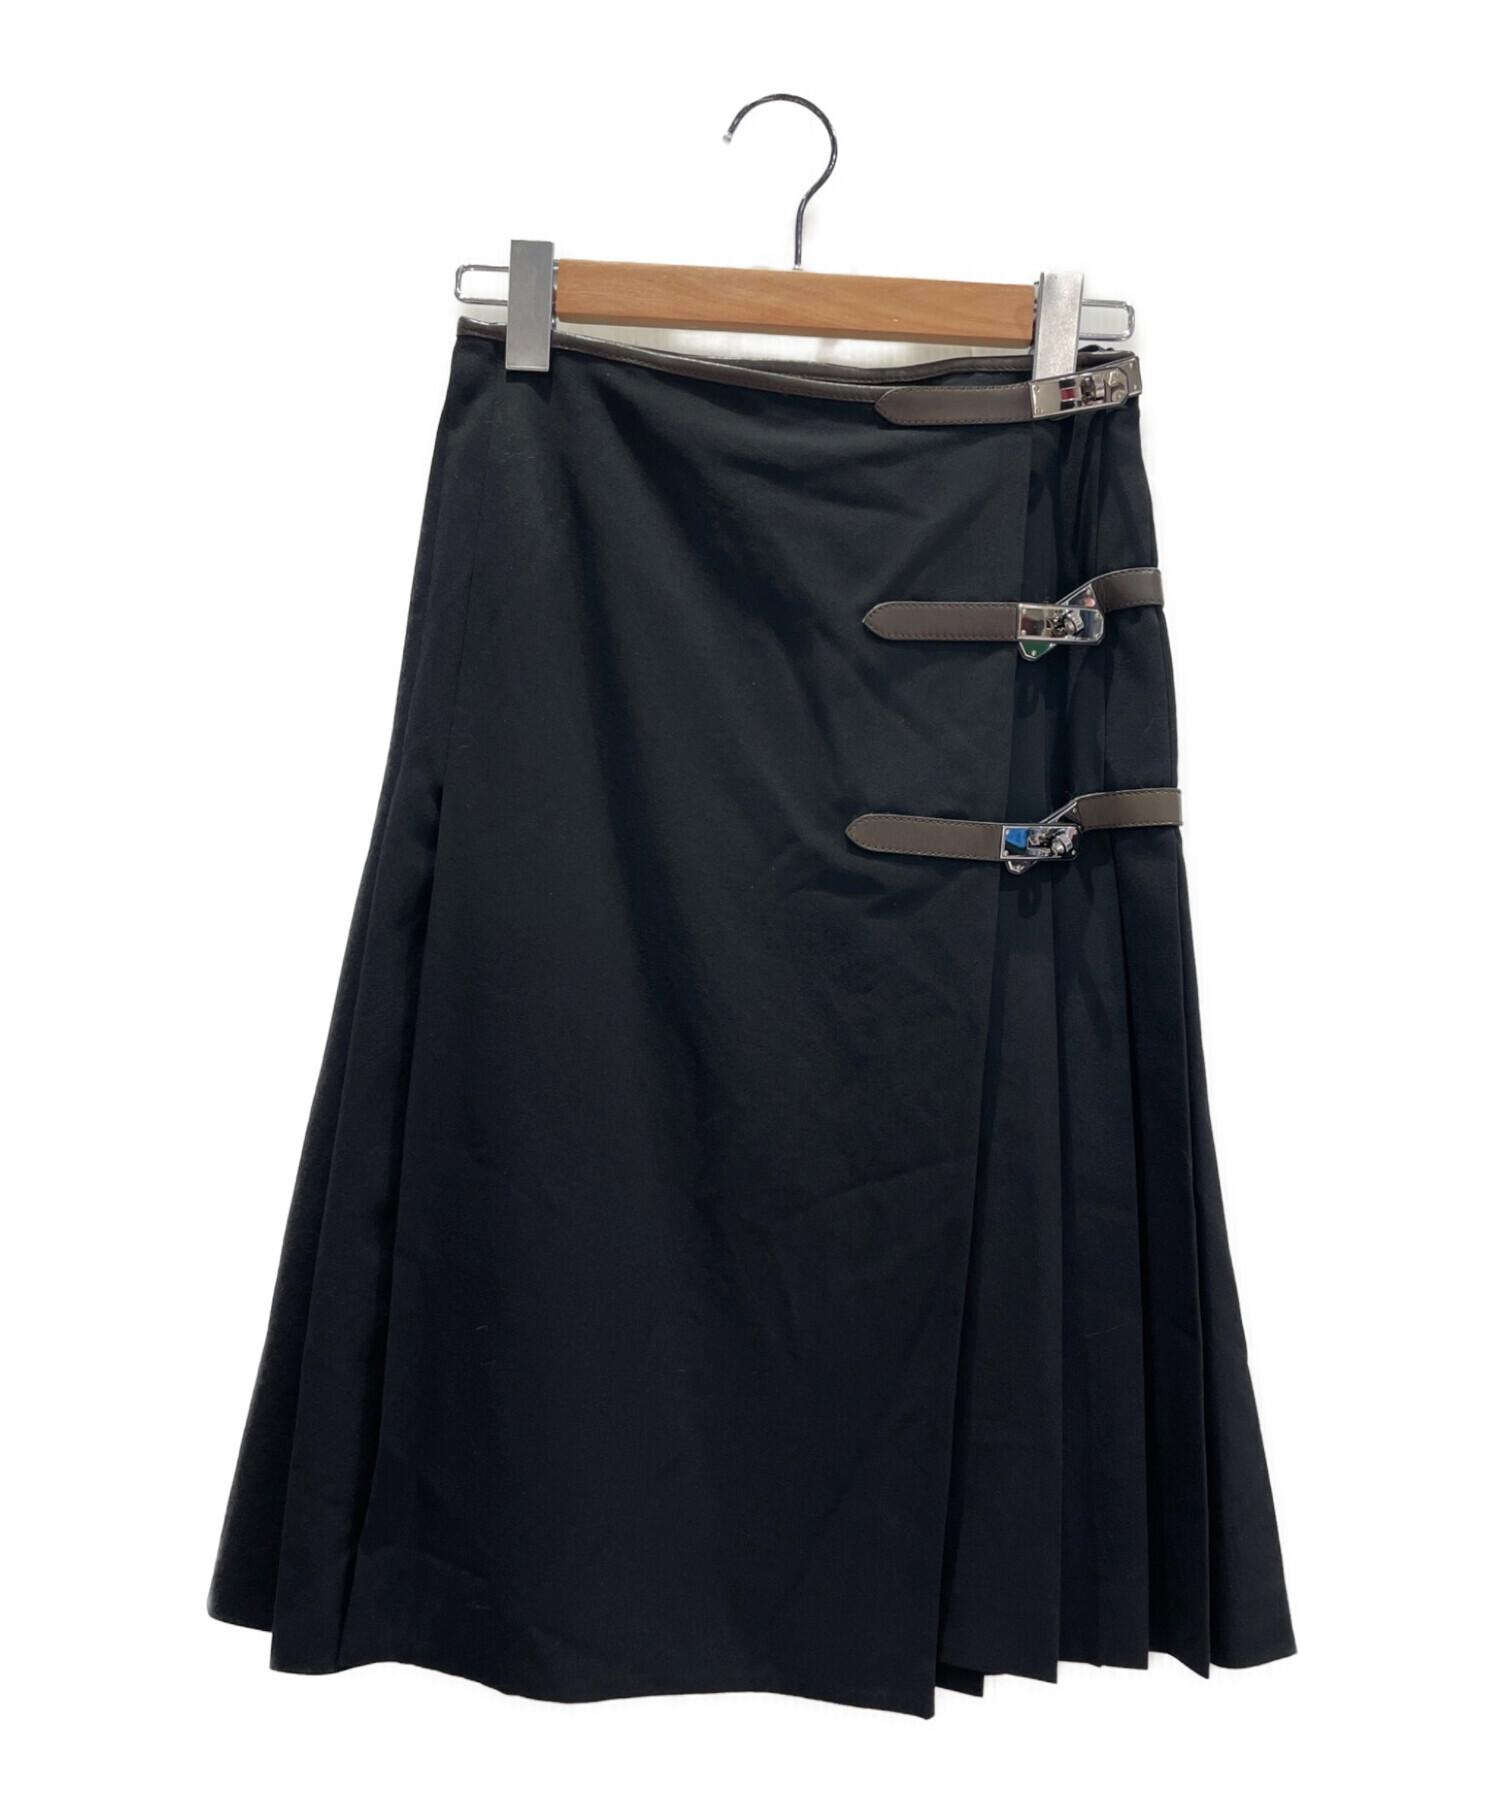 HERMES (エルメス) ケリープリーツデザインスカート ブラック サイズ:34